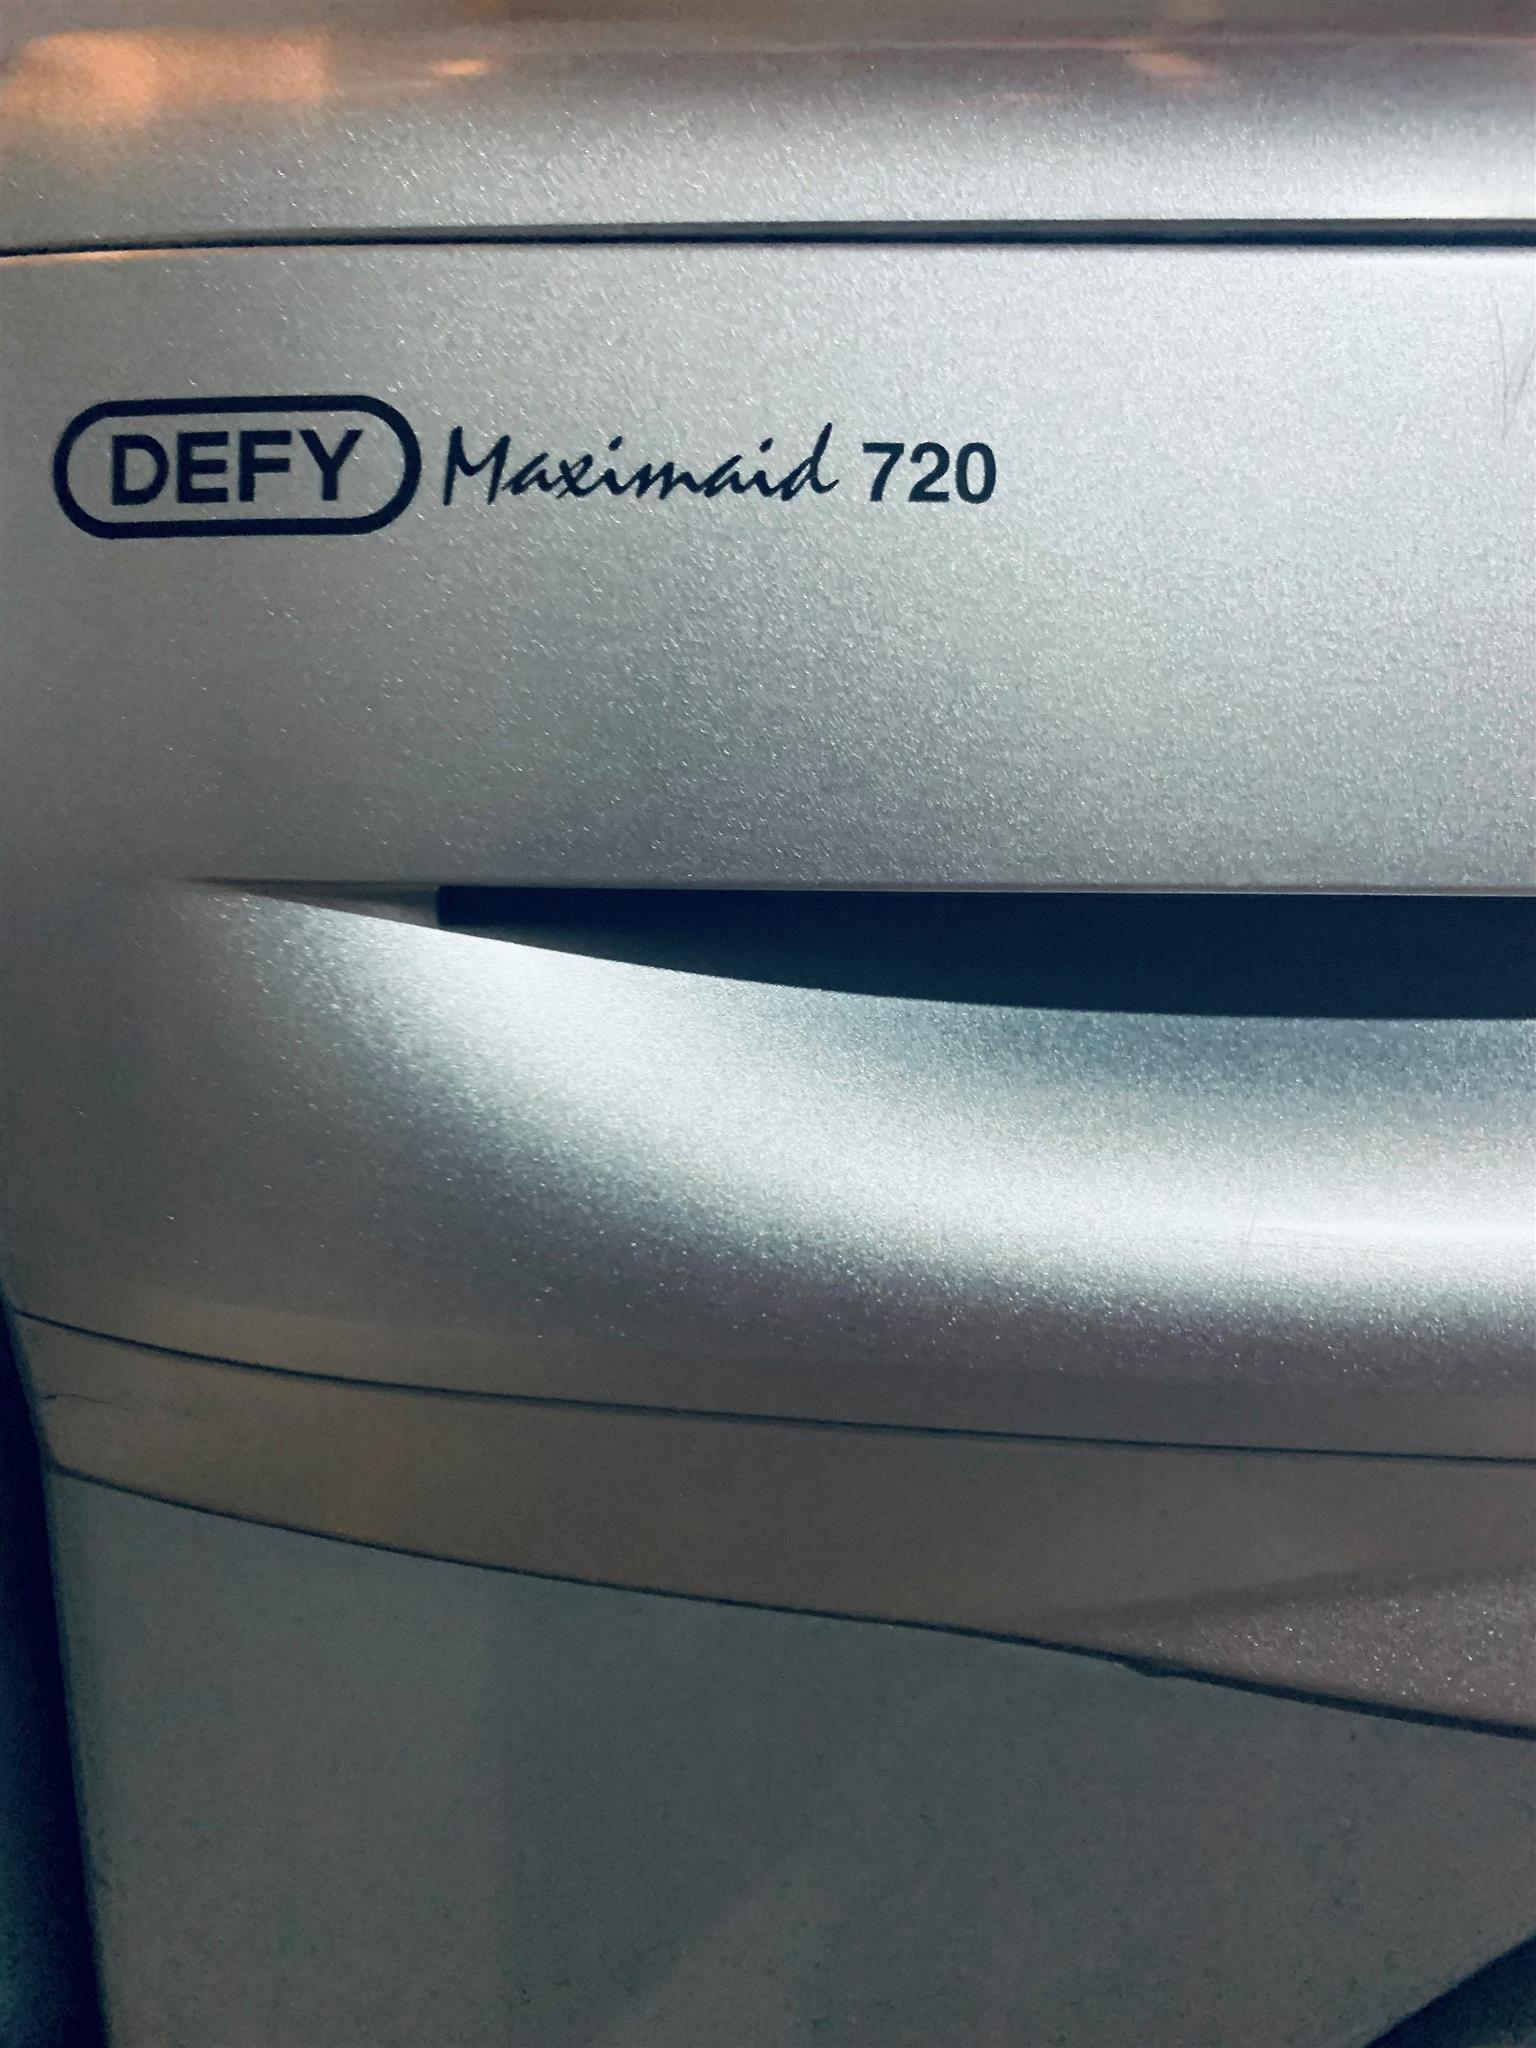 DEFY Maximaid 720 7 KG Front Loader Washing Machine